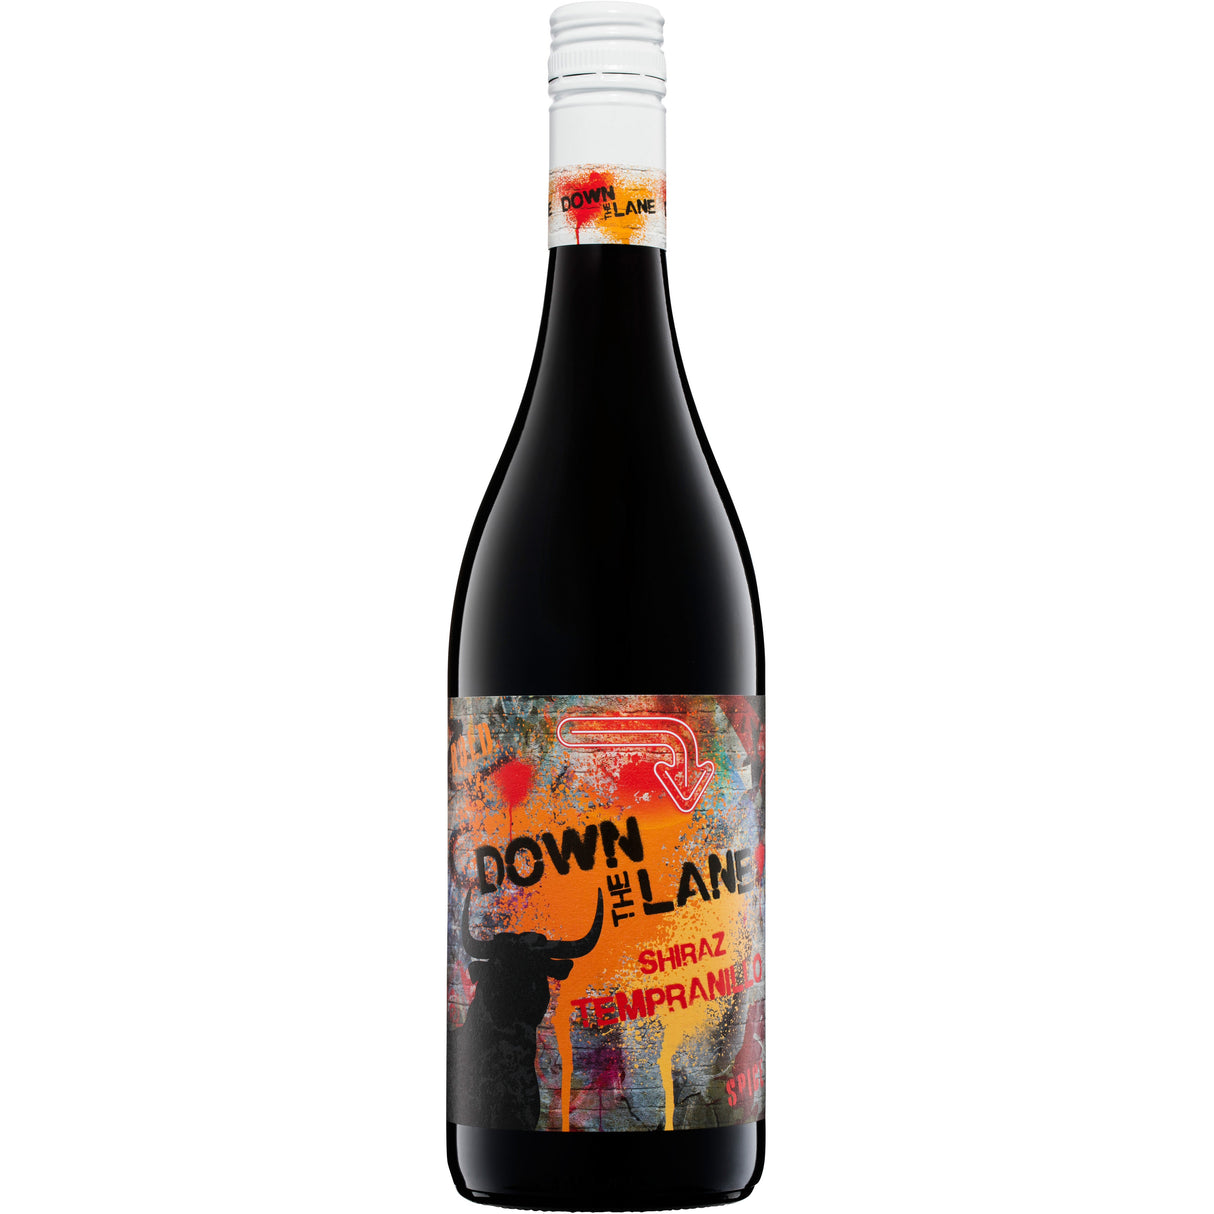 Down the Lane Shiraz Tempranillo 2020 (12 Bottles)